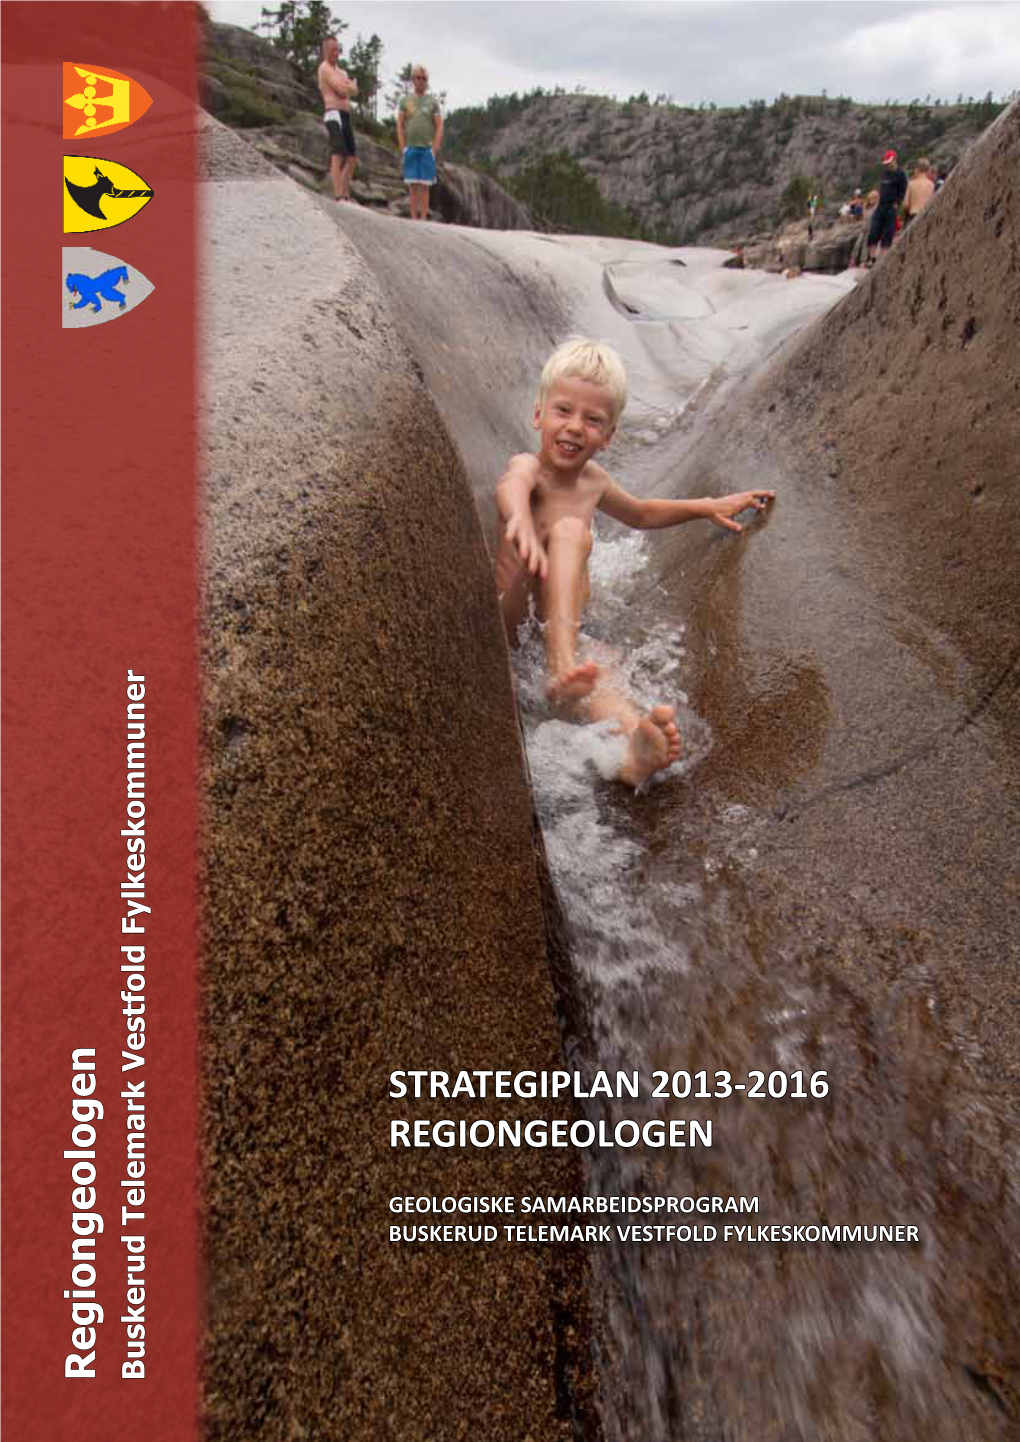 Strategiplan 2013-2016 Regiongeologen